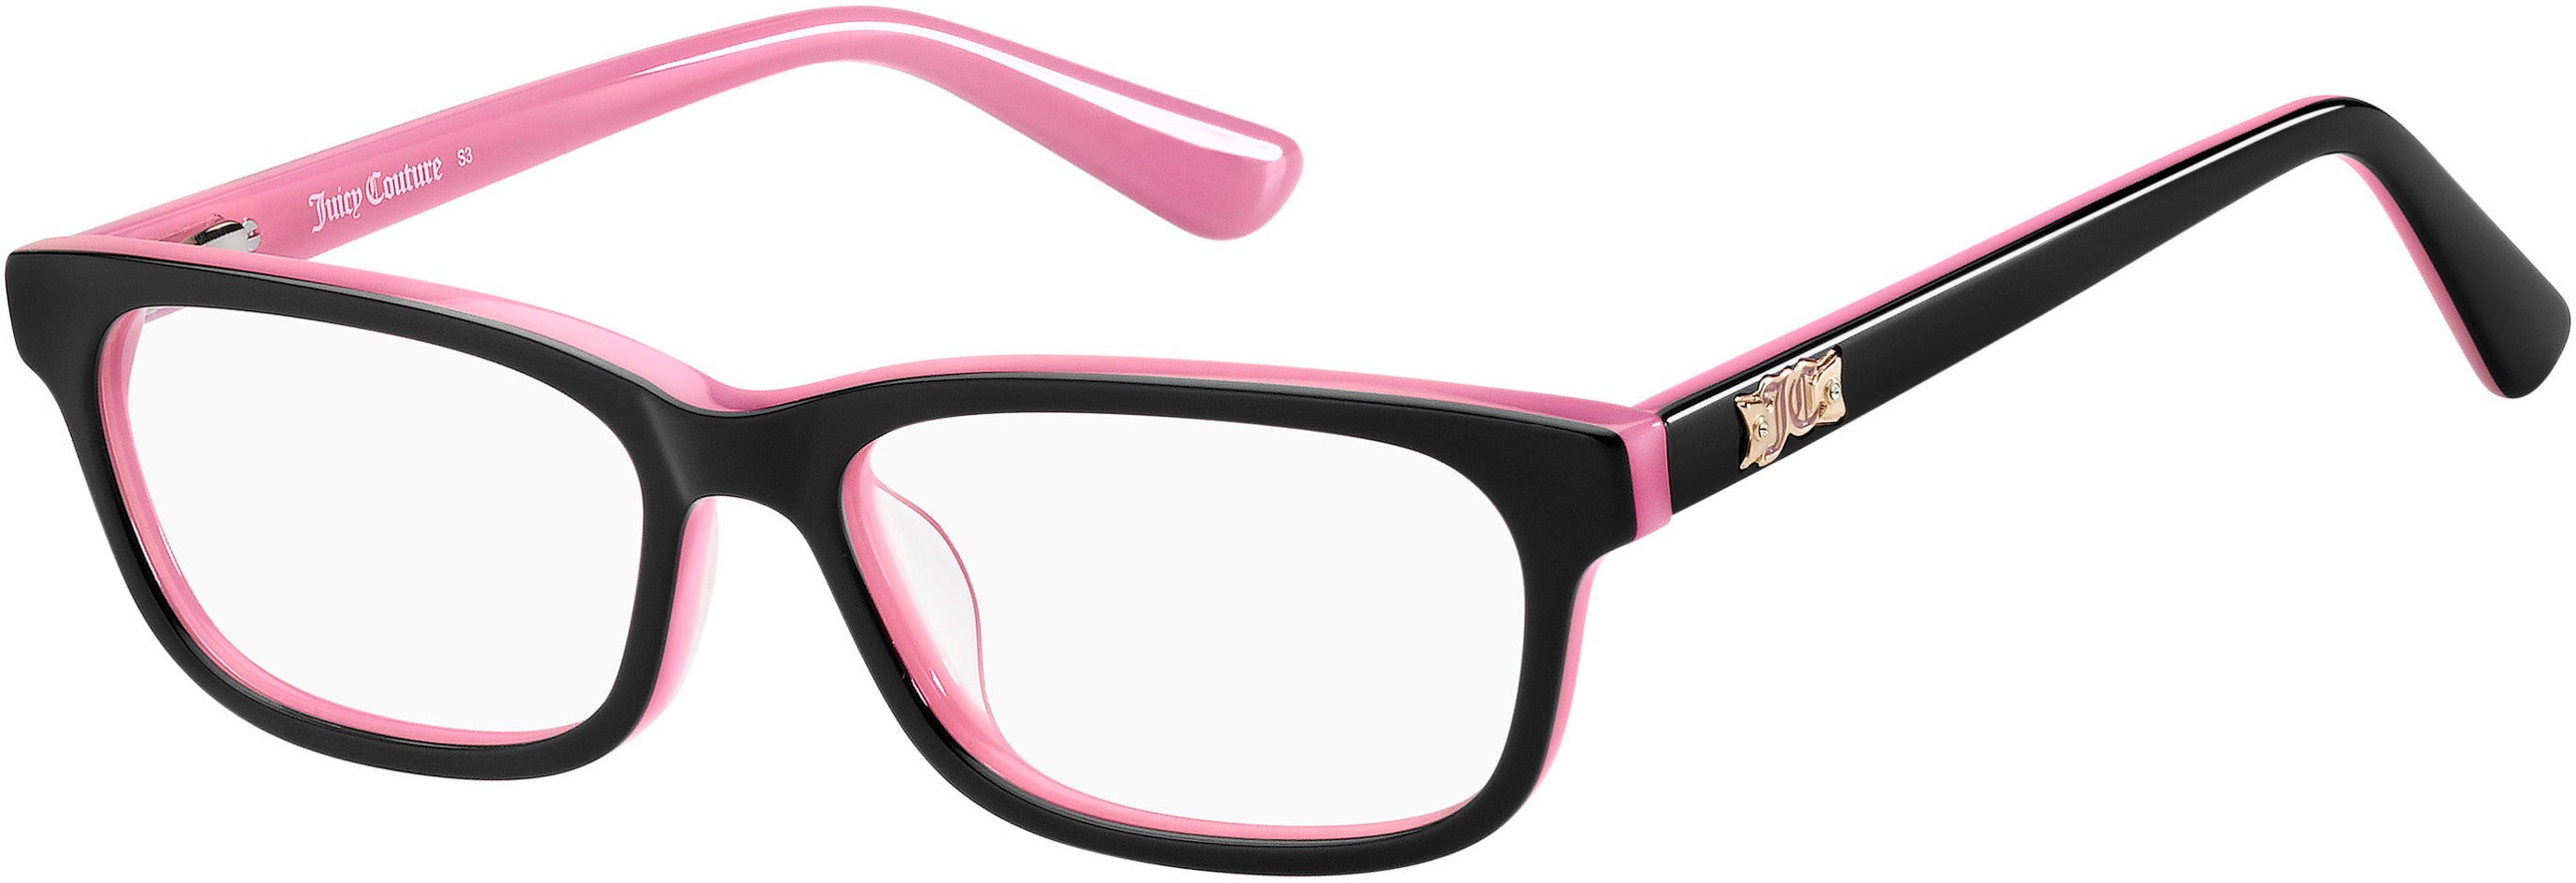 Juicy Couture Juicy 944 Rectangular Eyeglasses 03H2-03H2  Black Pink (00 Demo Lens)